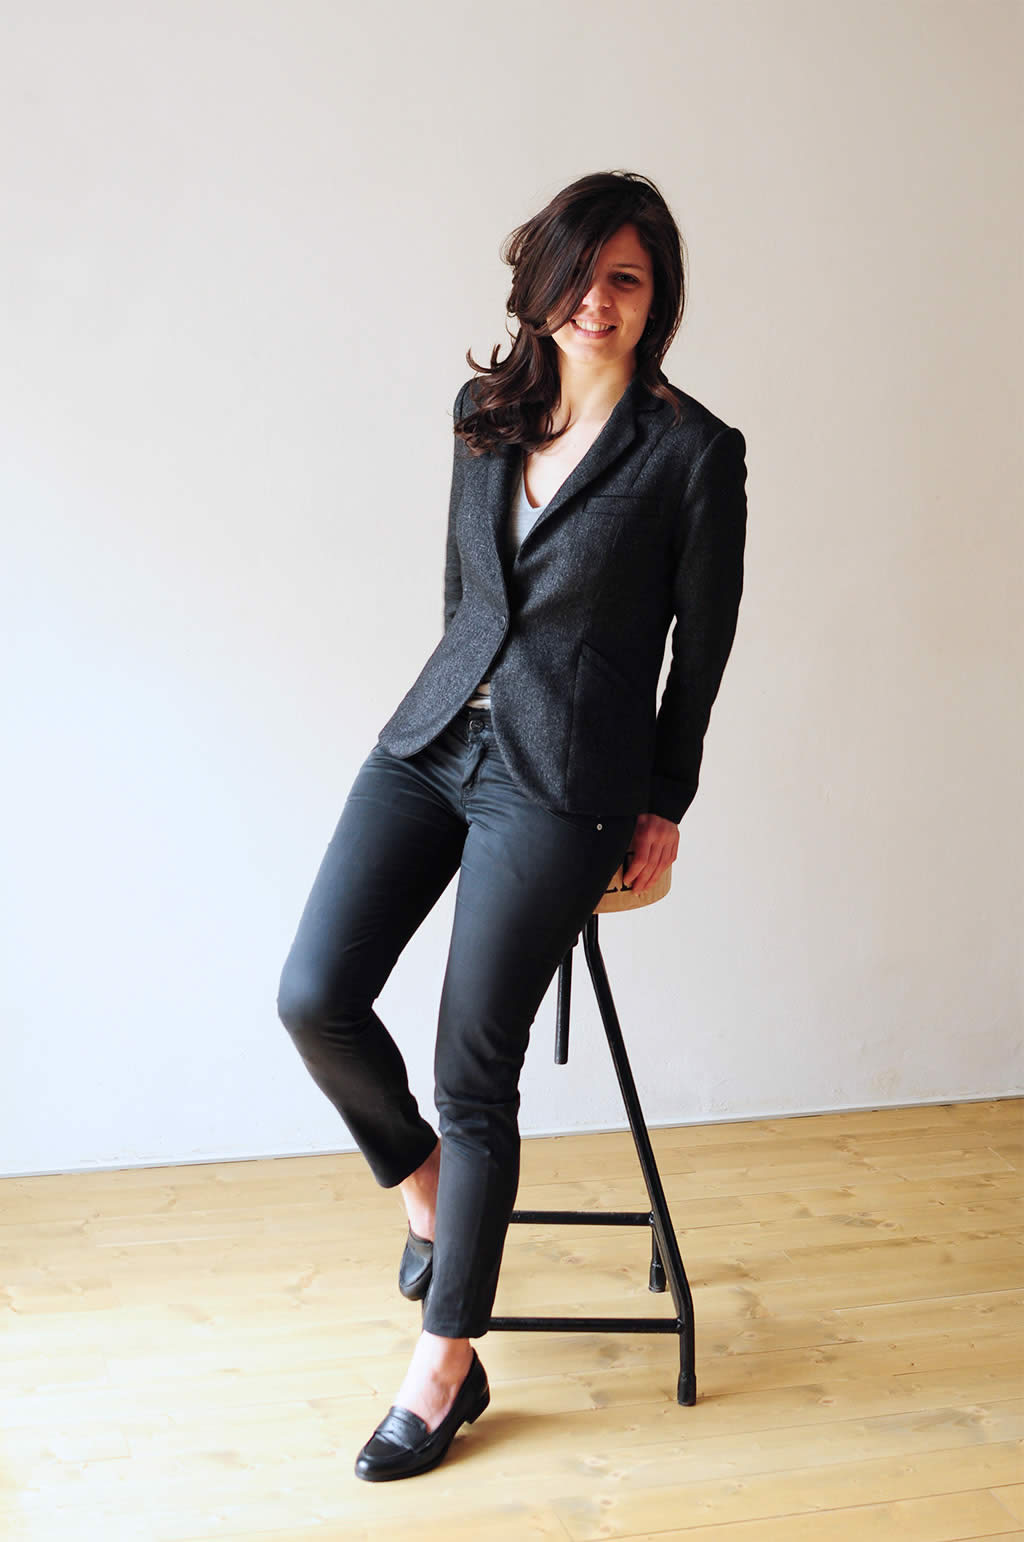 ladulsatina_sewiladulsatina - Sewing blog - Self-drafted blazer - formal outfit